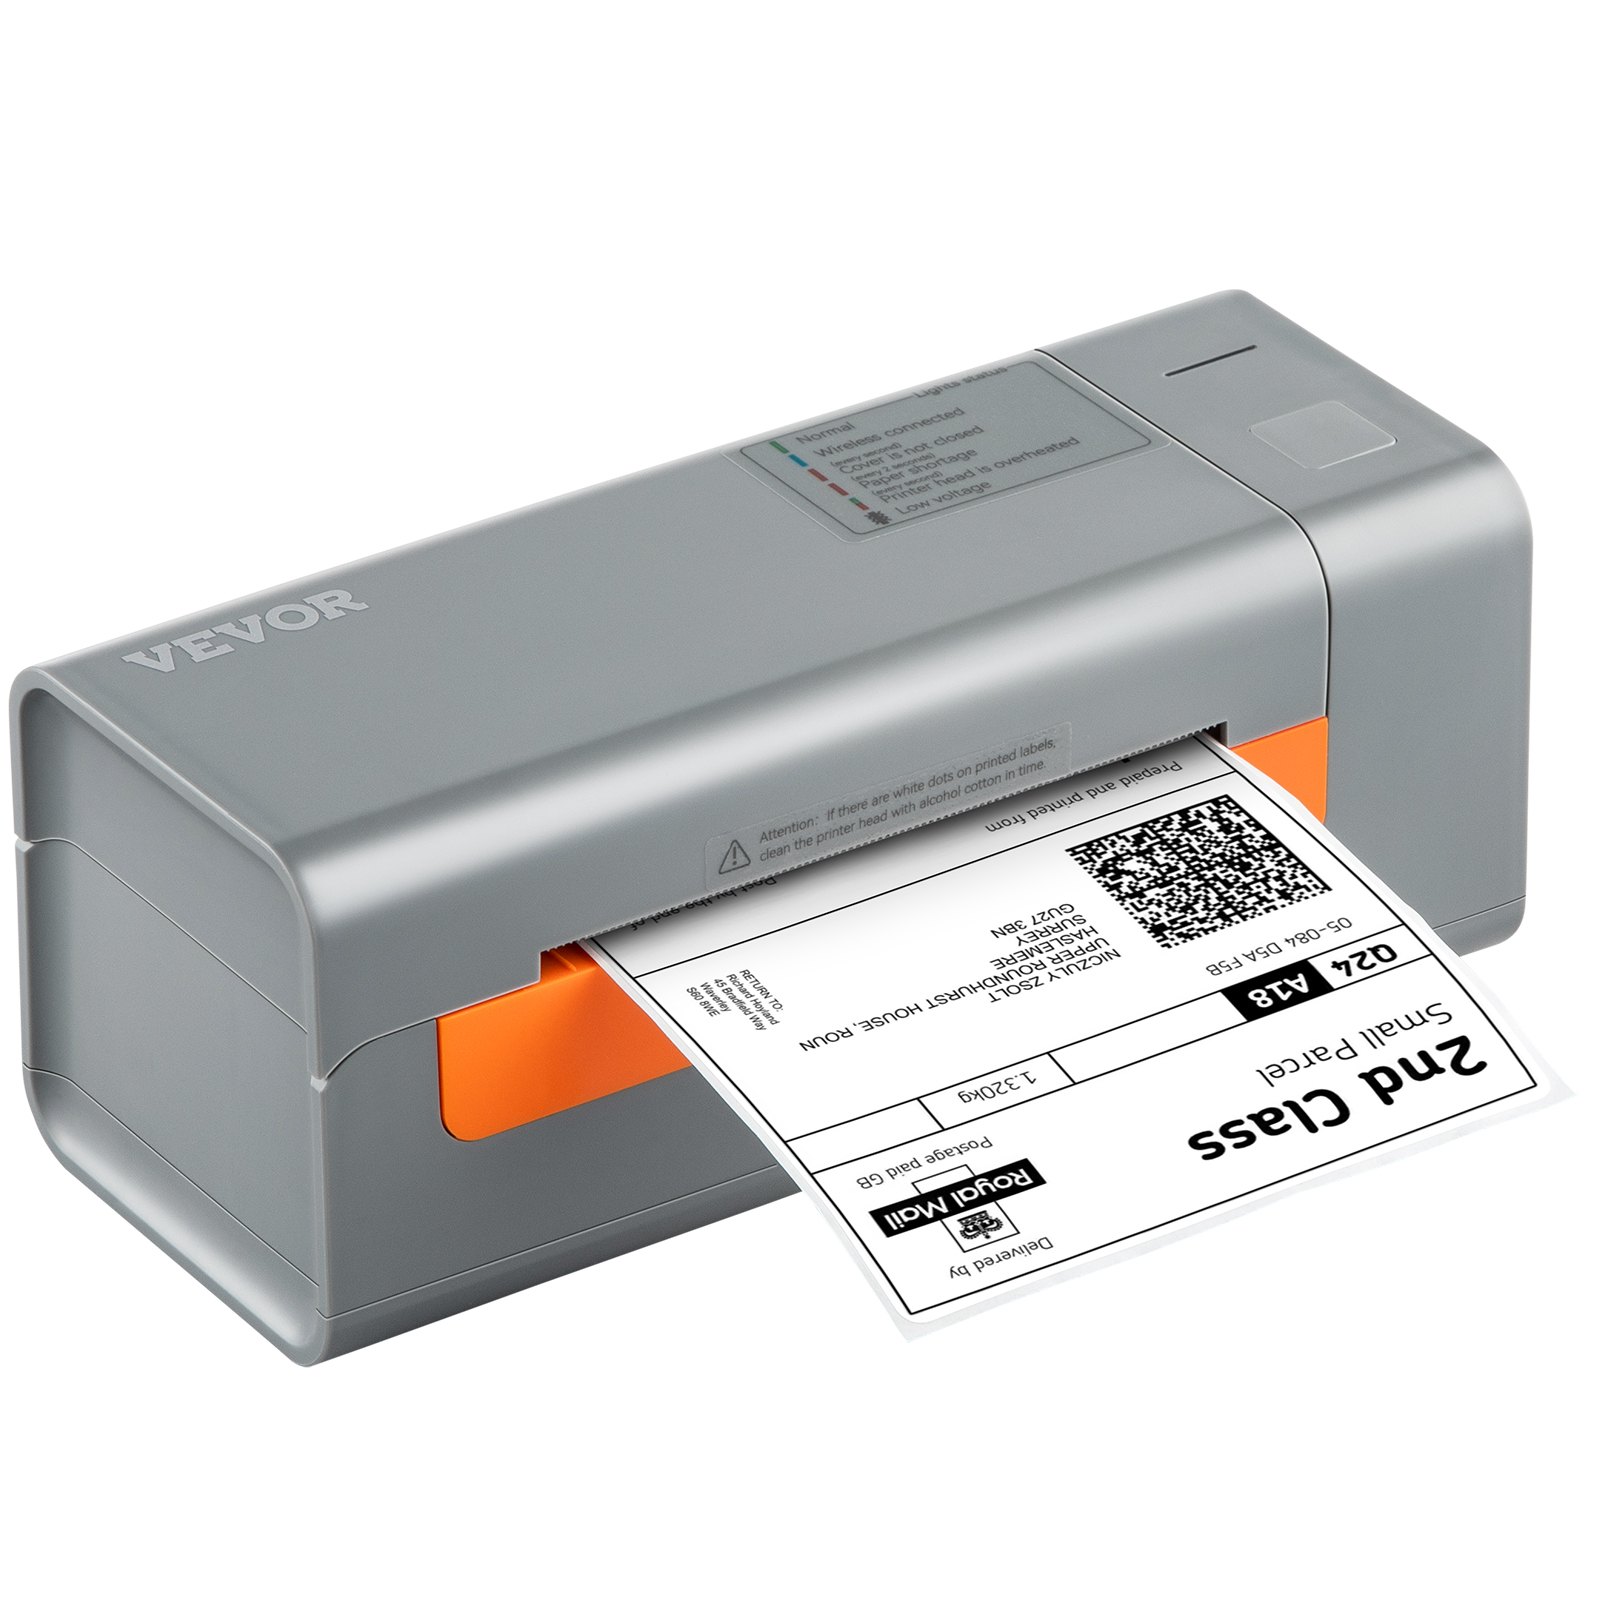 Vevor Thermal Label Printer 4x6 203dpi Usbbluetooth For Amazon Ebay Etsy Ups Vevor Us 7771